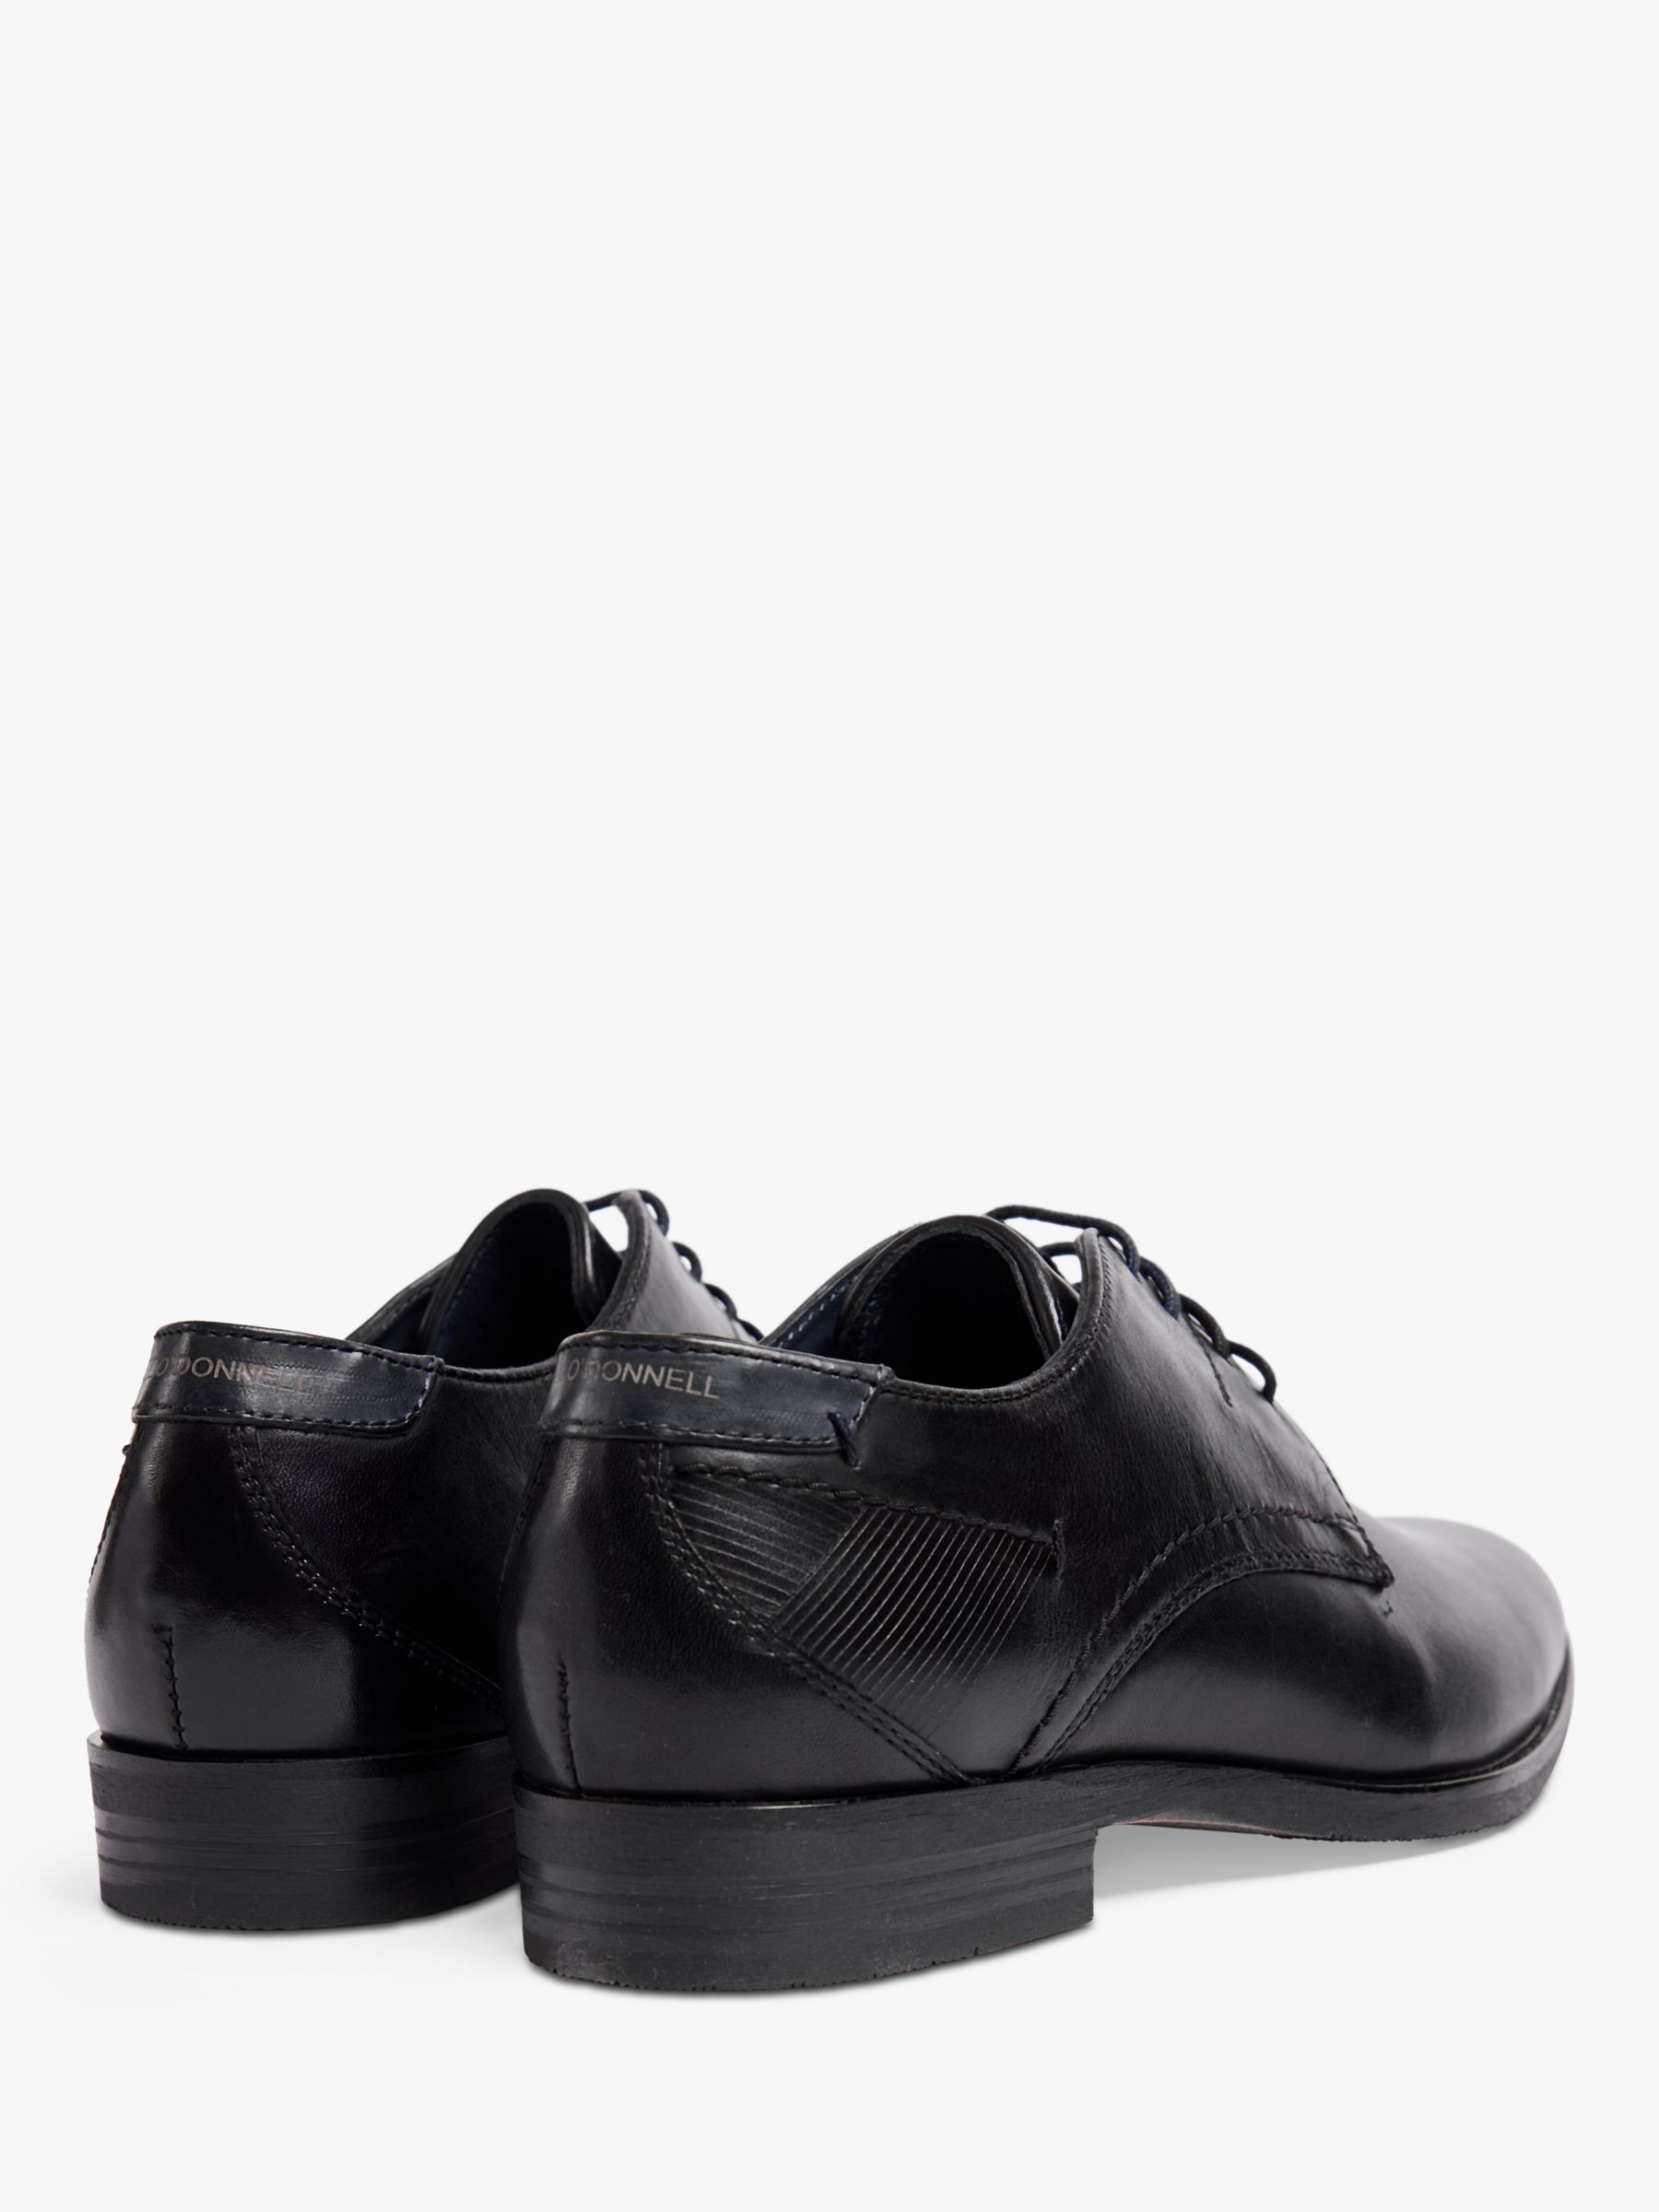 Pod Connor Leather Lace Shoes, Black, 9